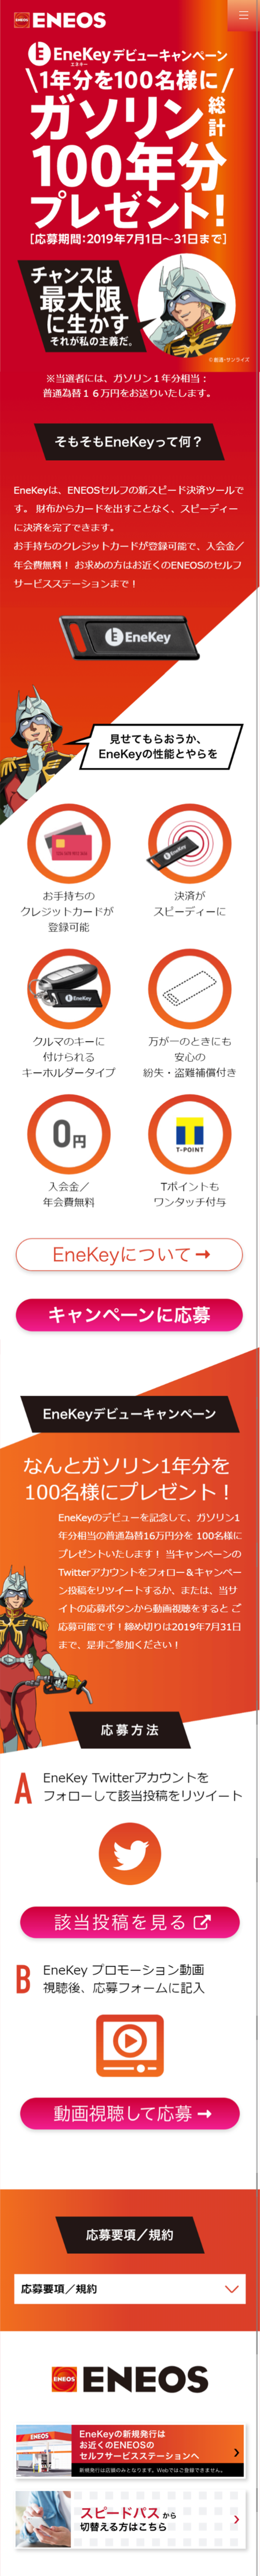 EneKeyデビューキャンペーン_sp_1